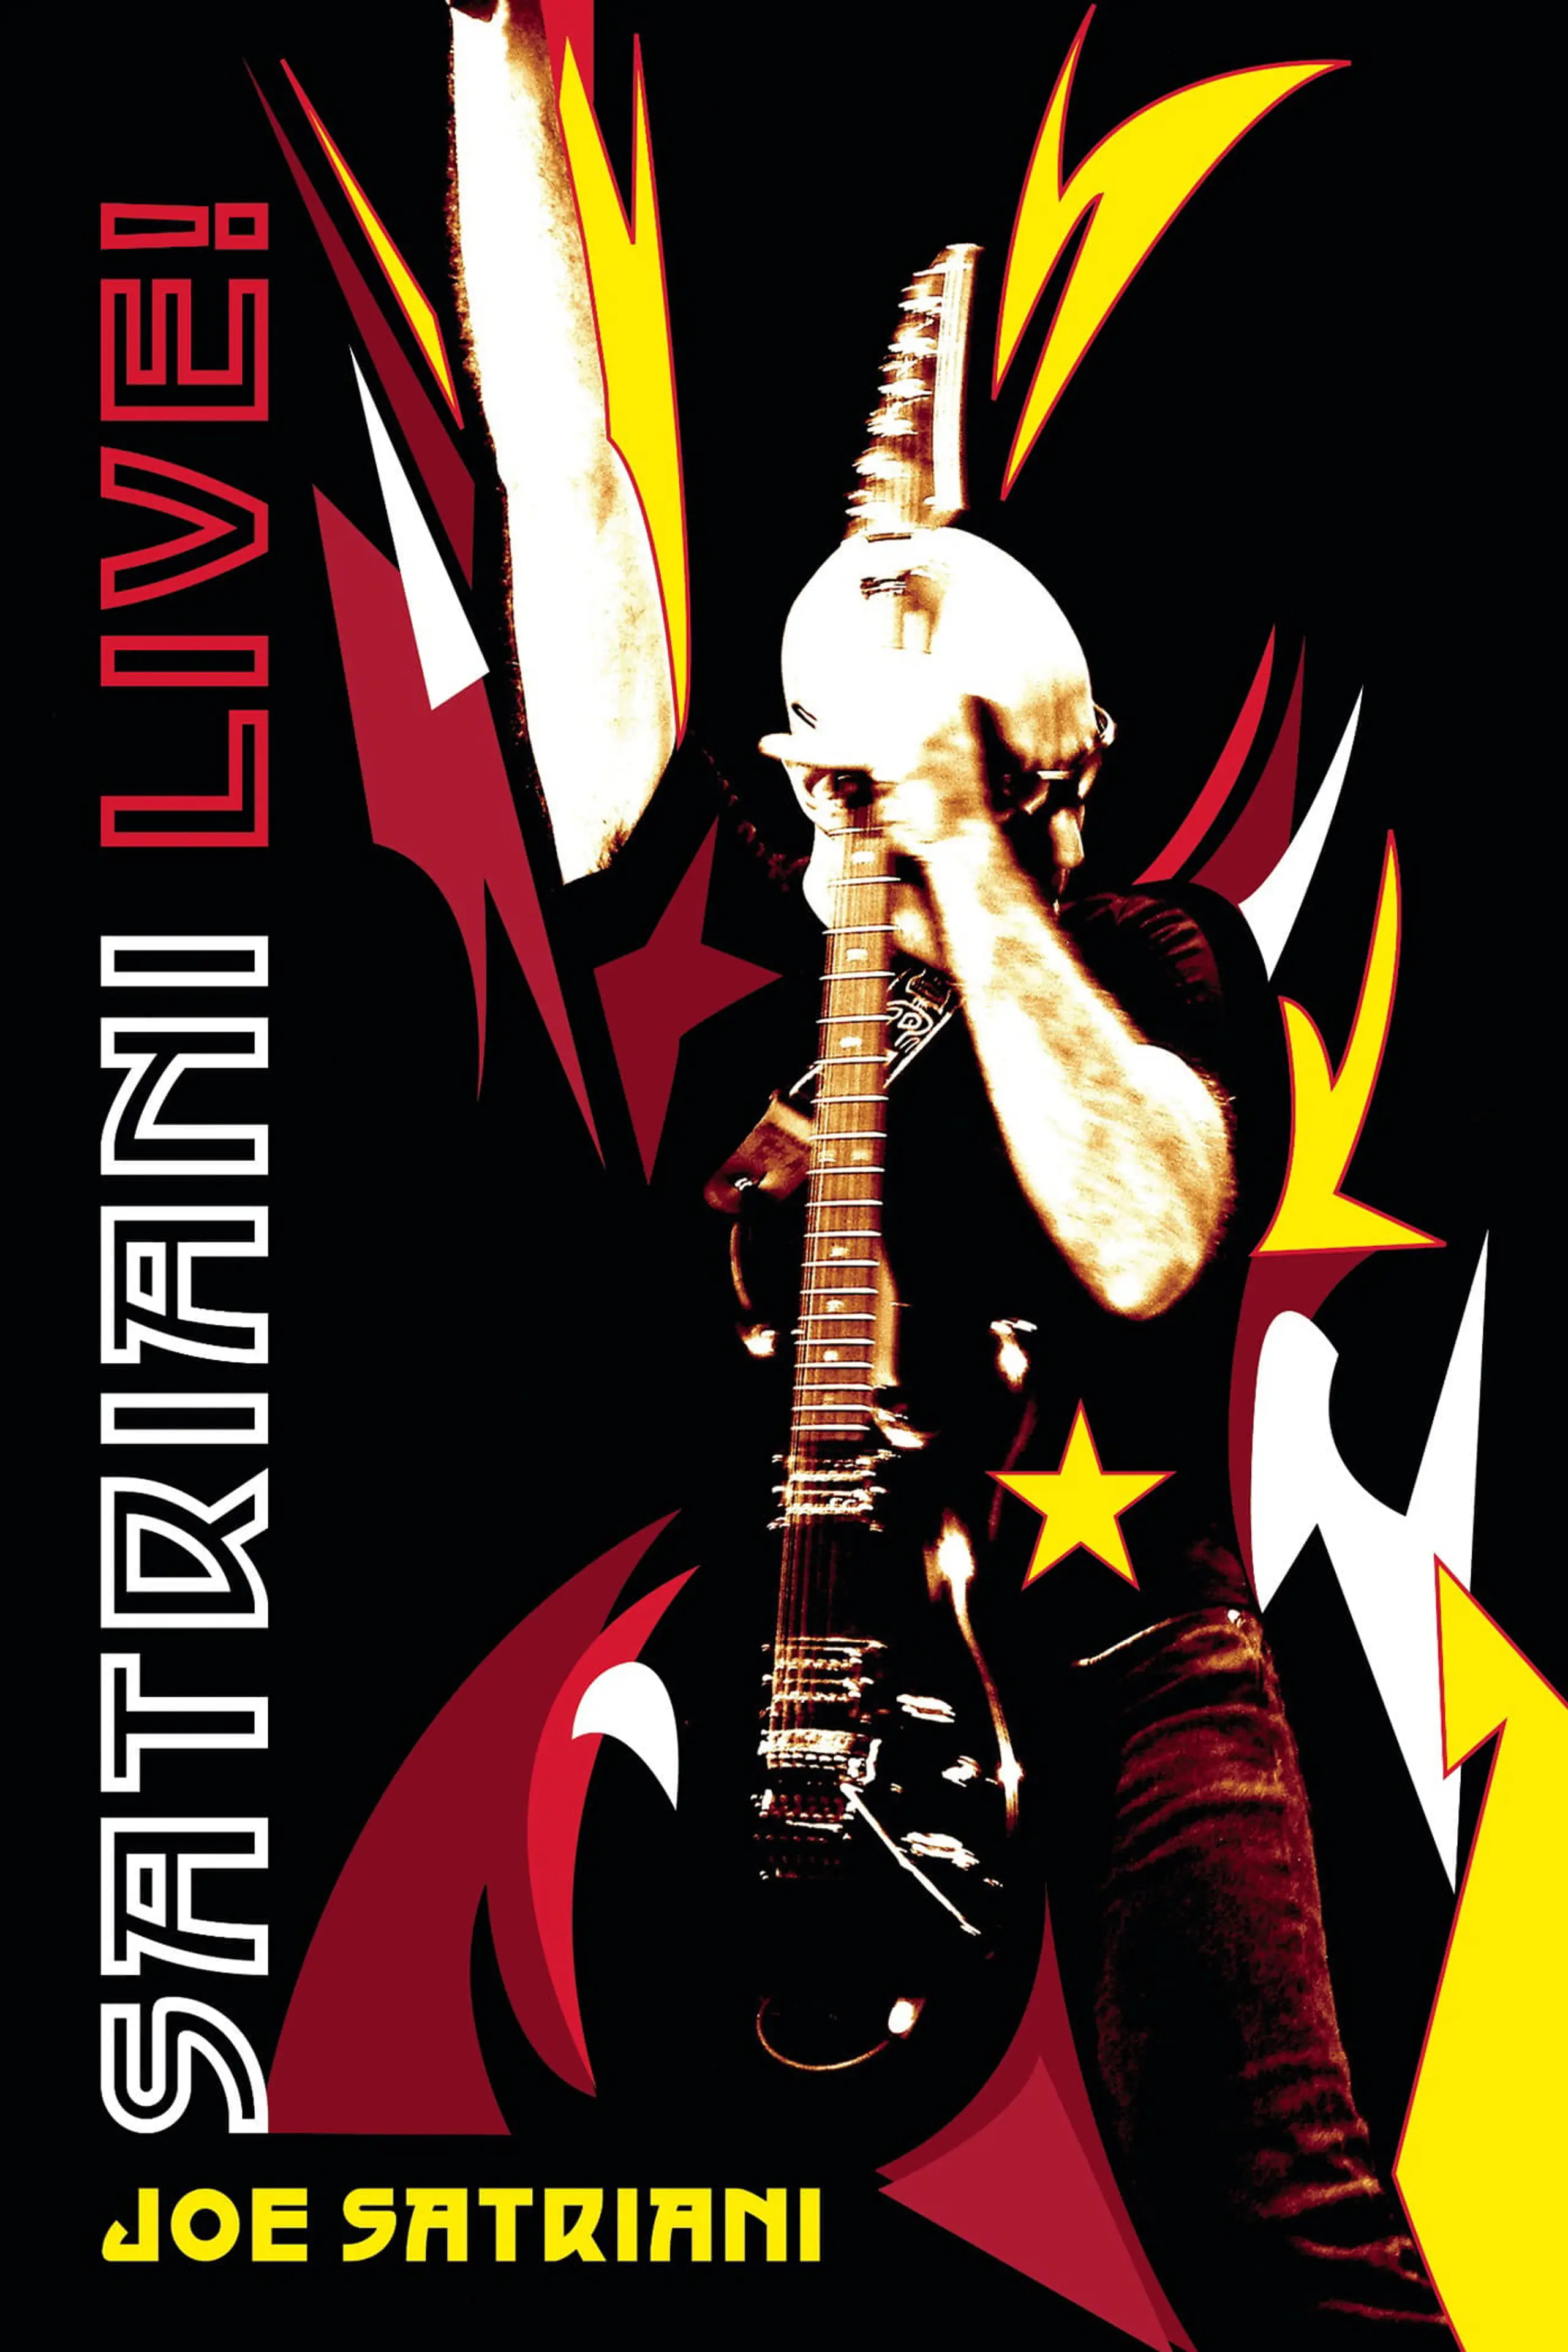 Joe Satriani - Live - The Grove in Anaheim